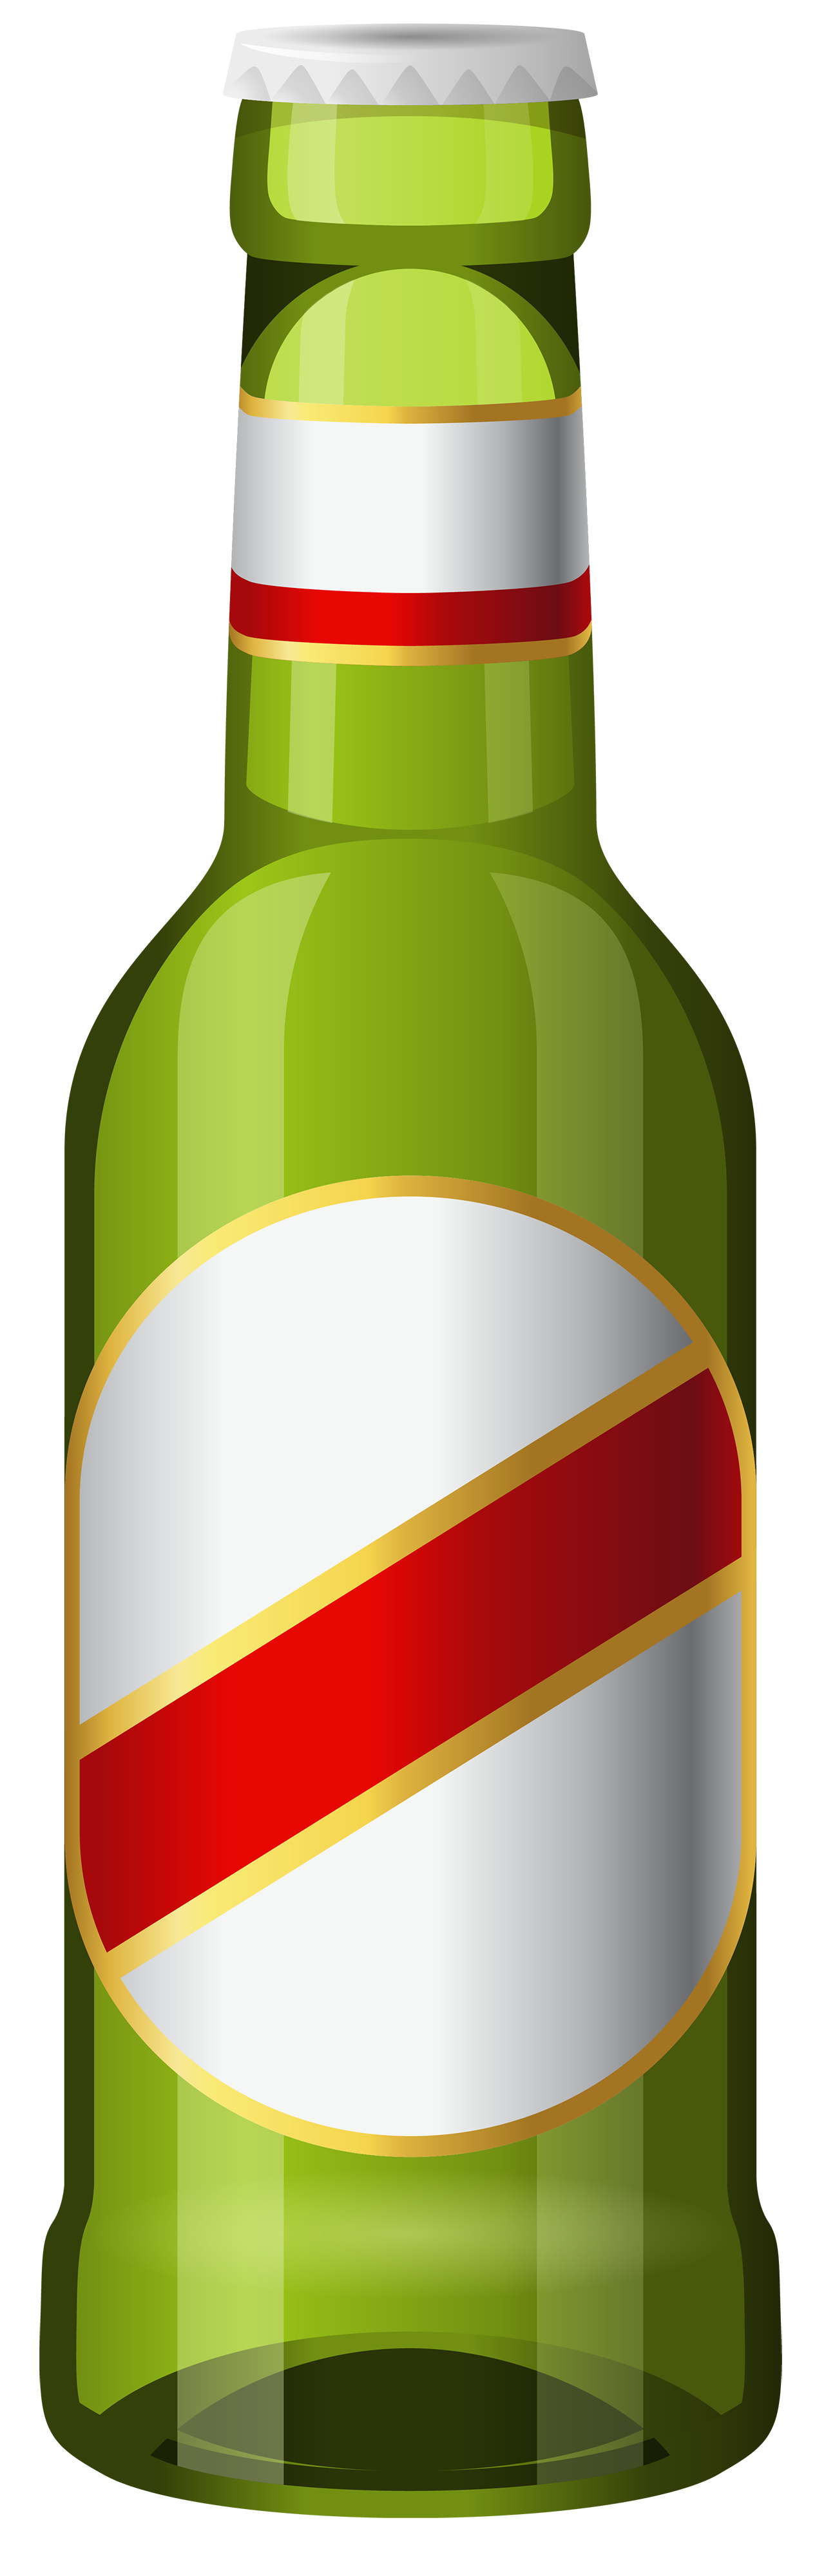 Beer bottle clip art png. Green clipart best web